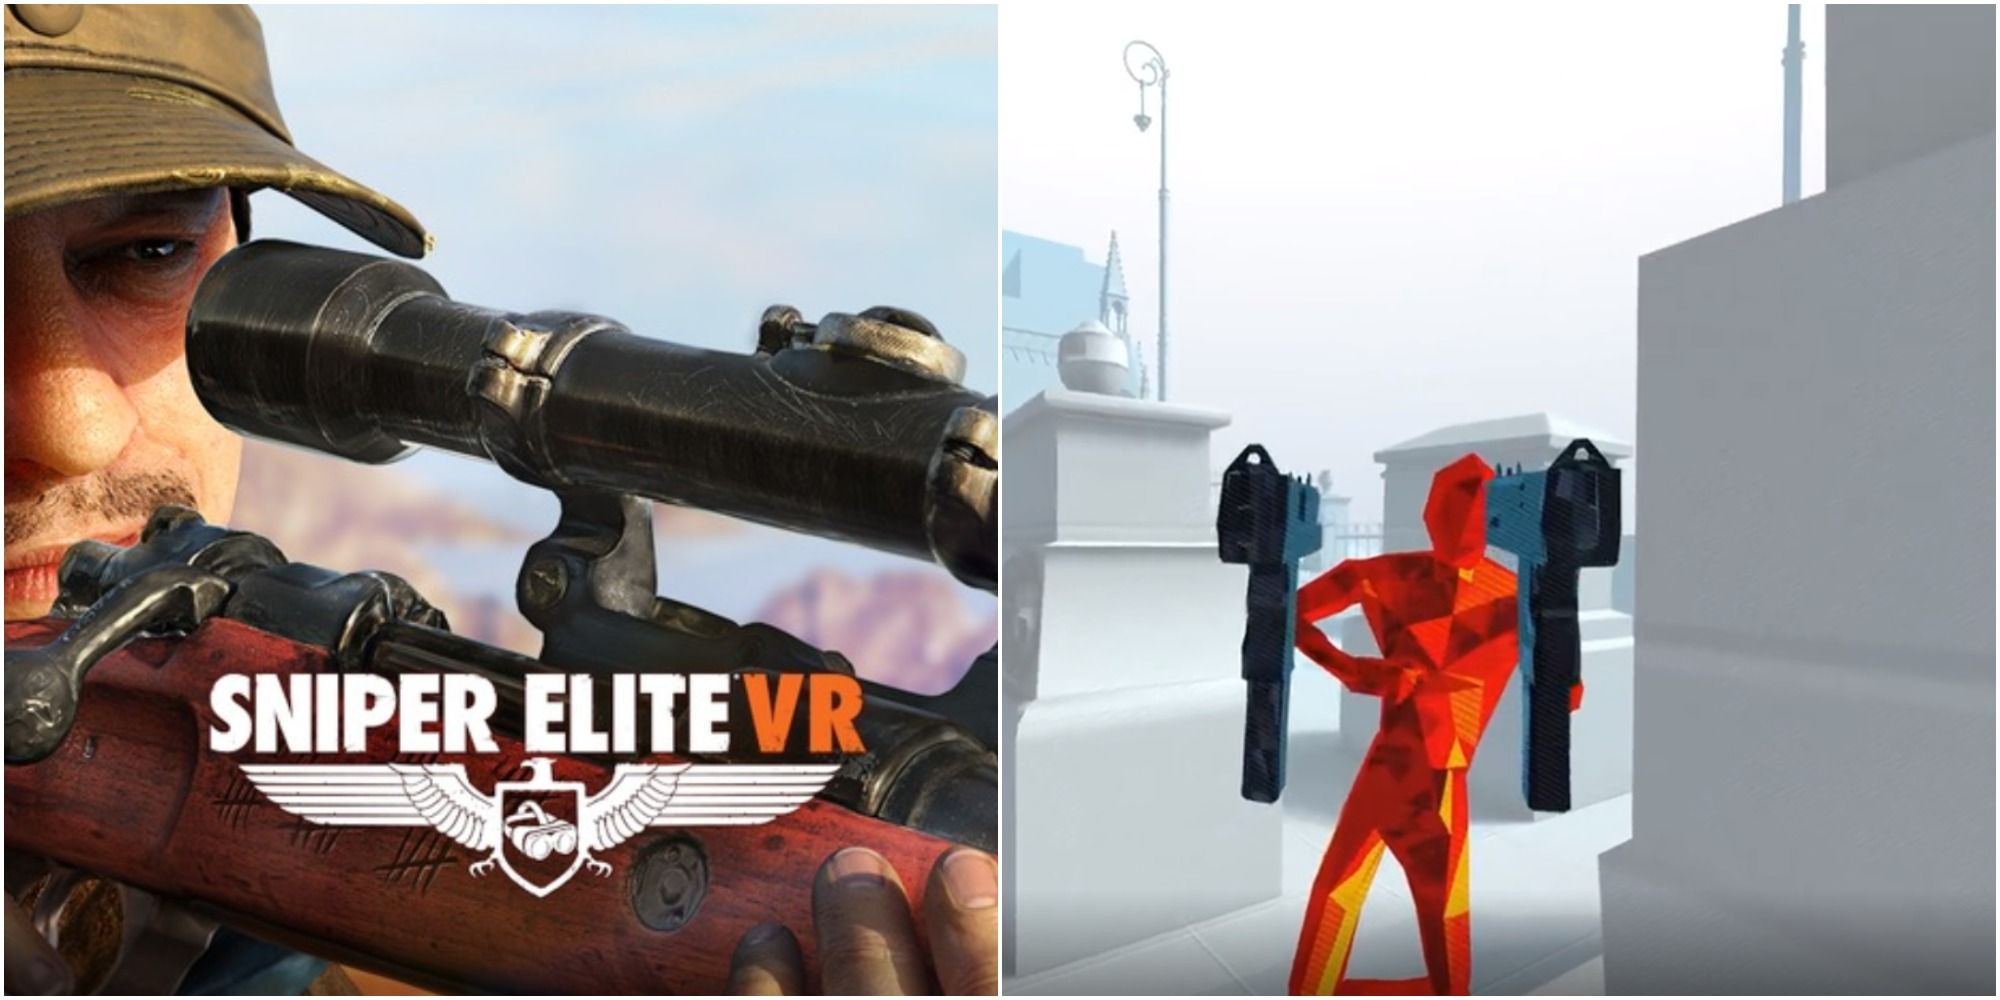 Sniper_Elite_VR_and_Superhot_enemy